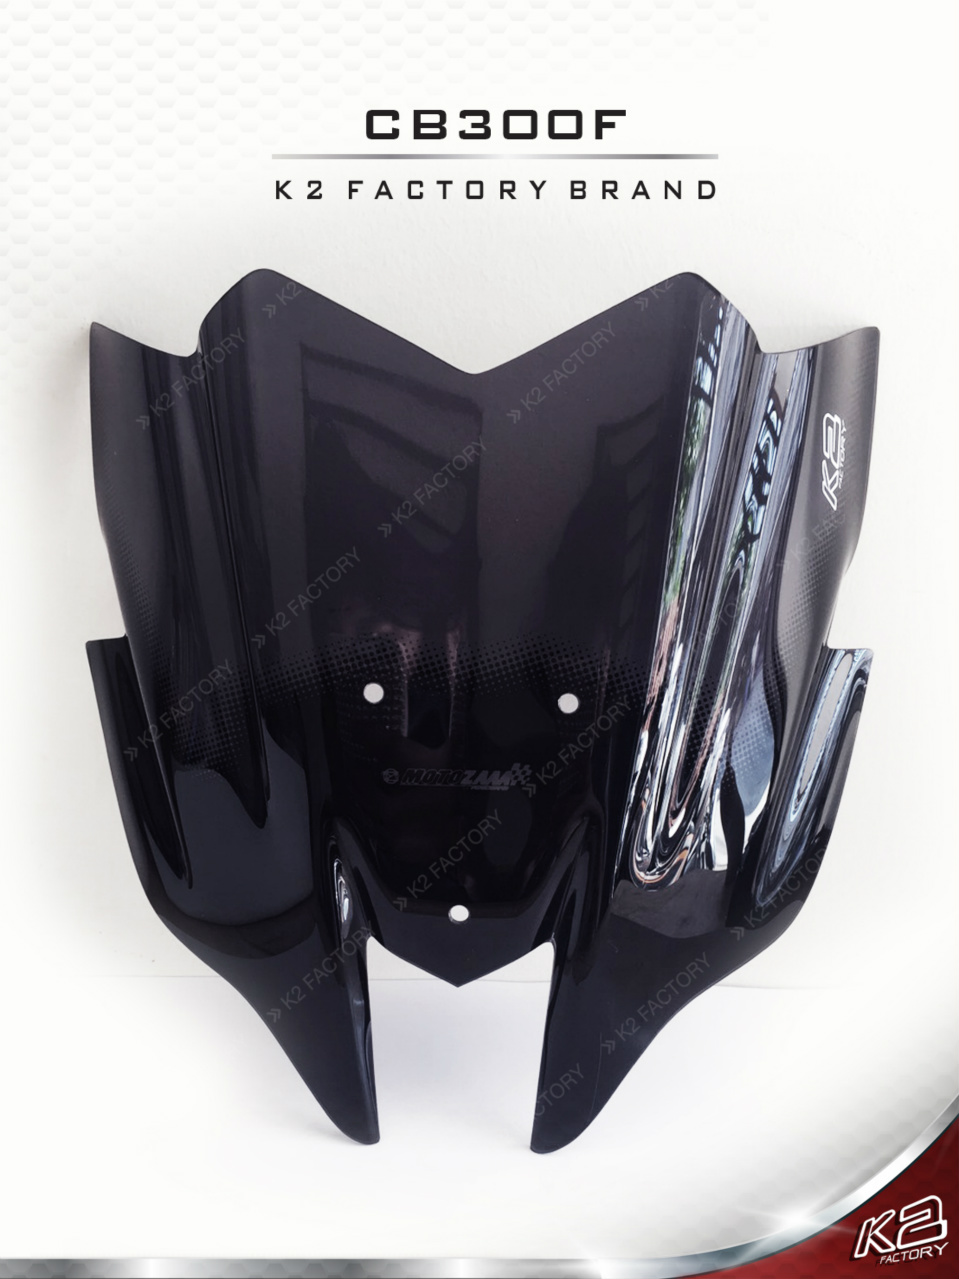 【K2 Factory Brand】風鏡 CB300F